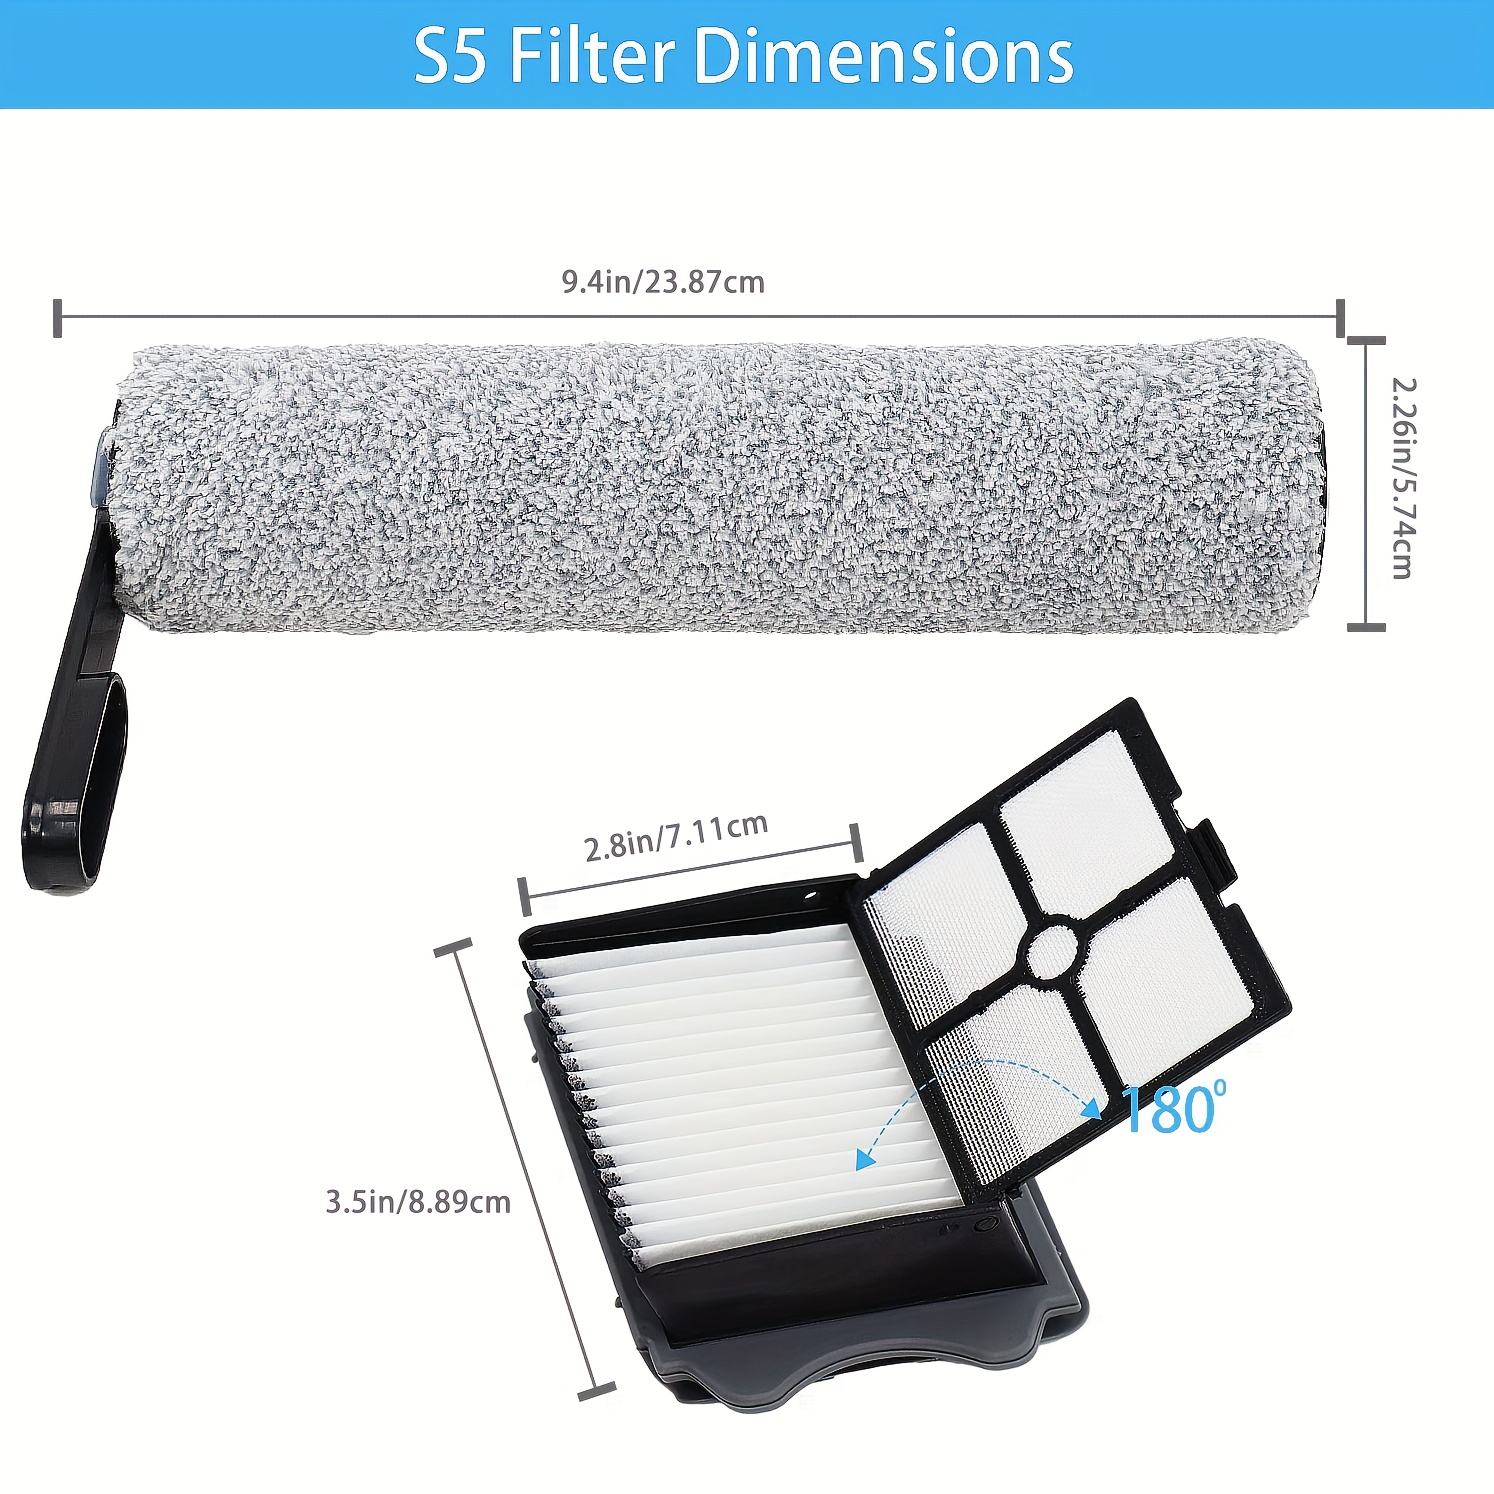 ROLLER BRUSH ACCESSORIES For Tineco Floor S5 & S5 Pro2 Microfiber Soft  $43.14 - PicClick AU